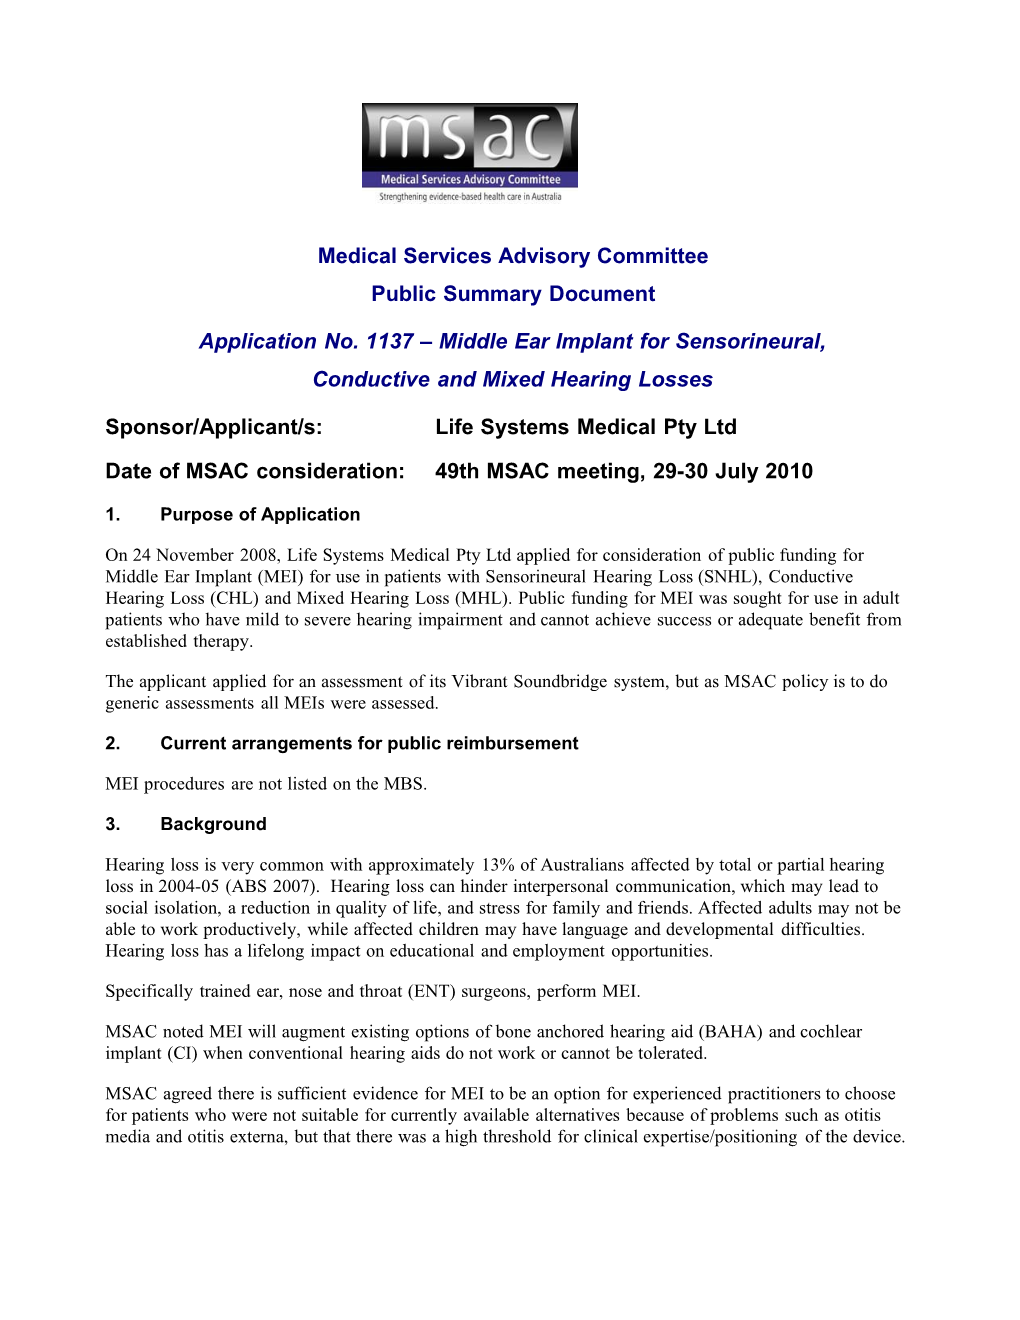 M2M - Att a - PSD 1137 - MEI 6.9.10 Members Endorsed Minutes